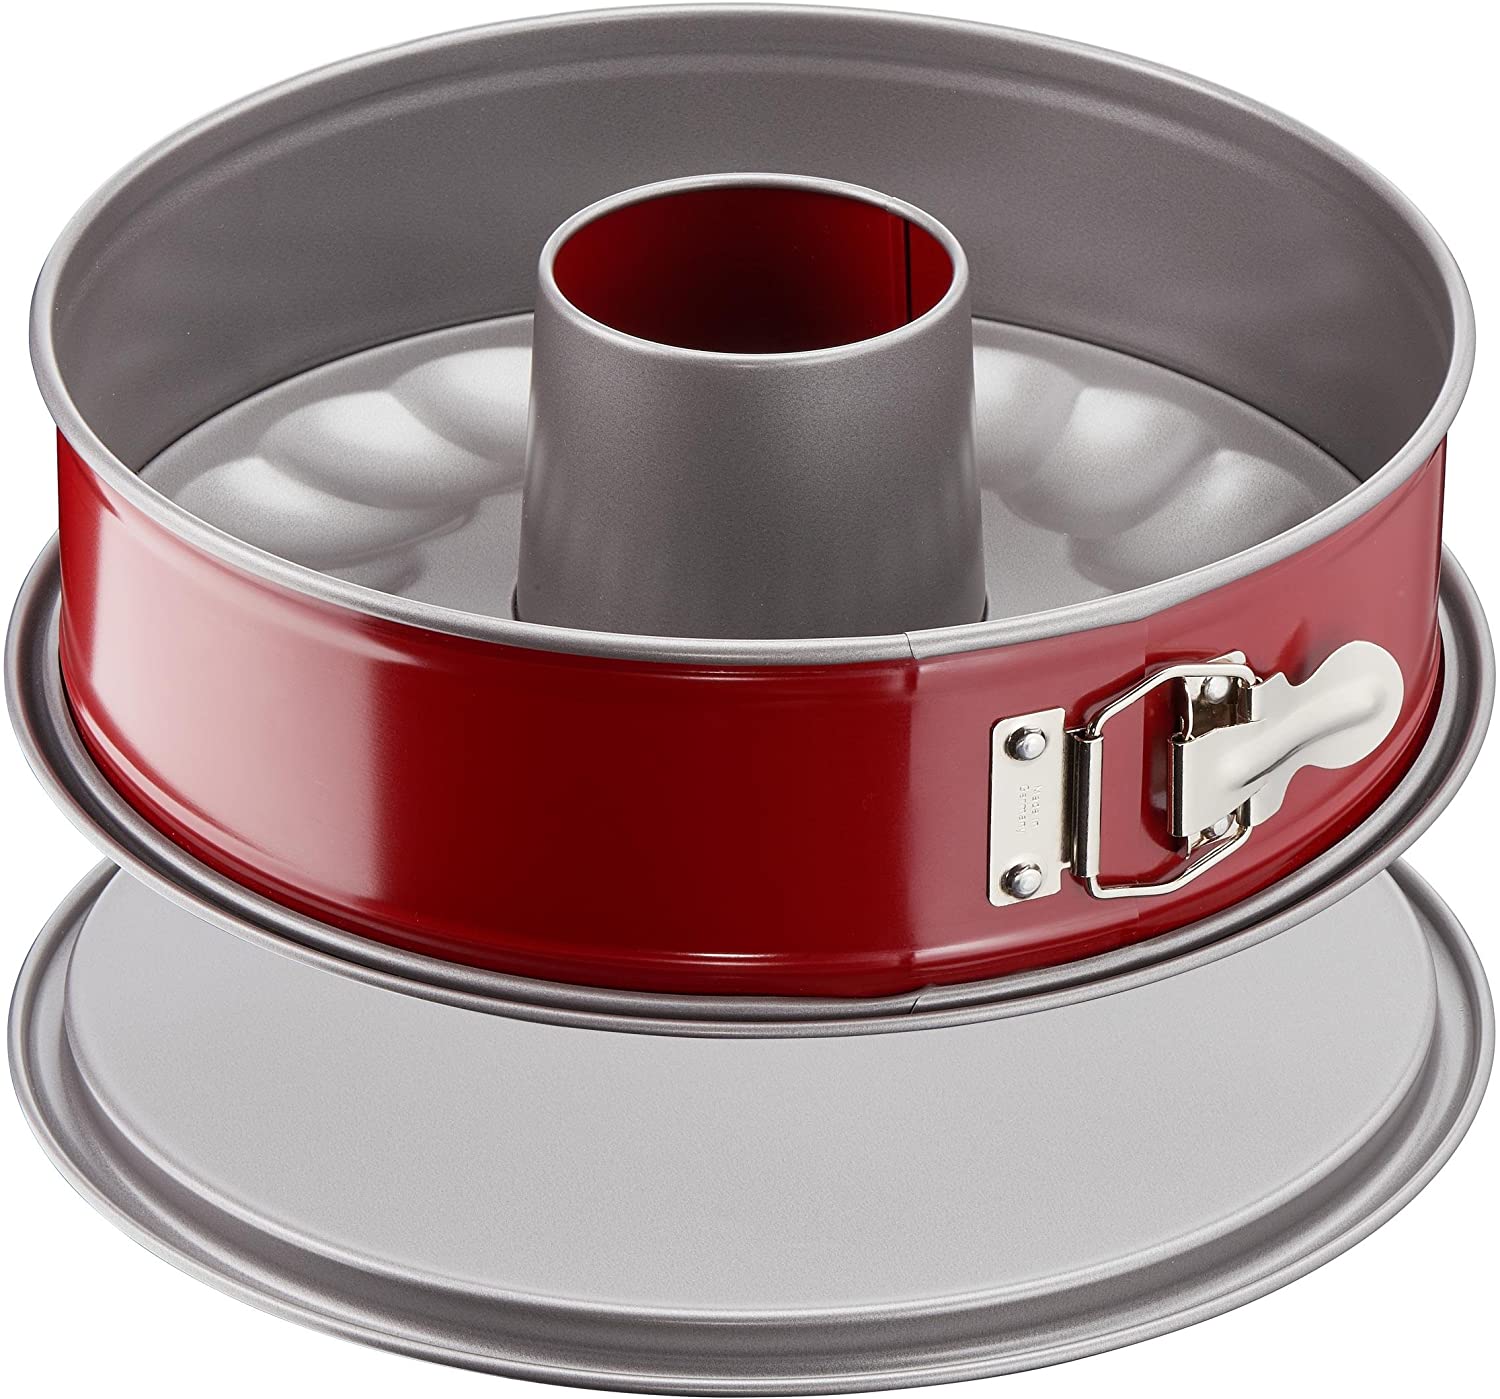 Tefal J1642814 Savarin Cake Tin with Hinge – Steel – Red, 27 cm